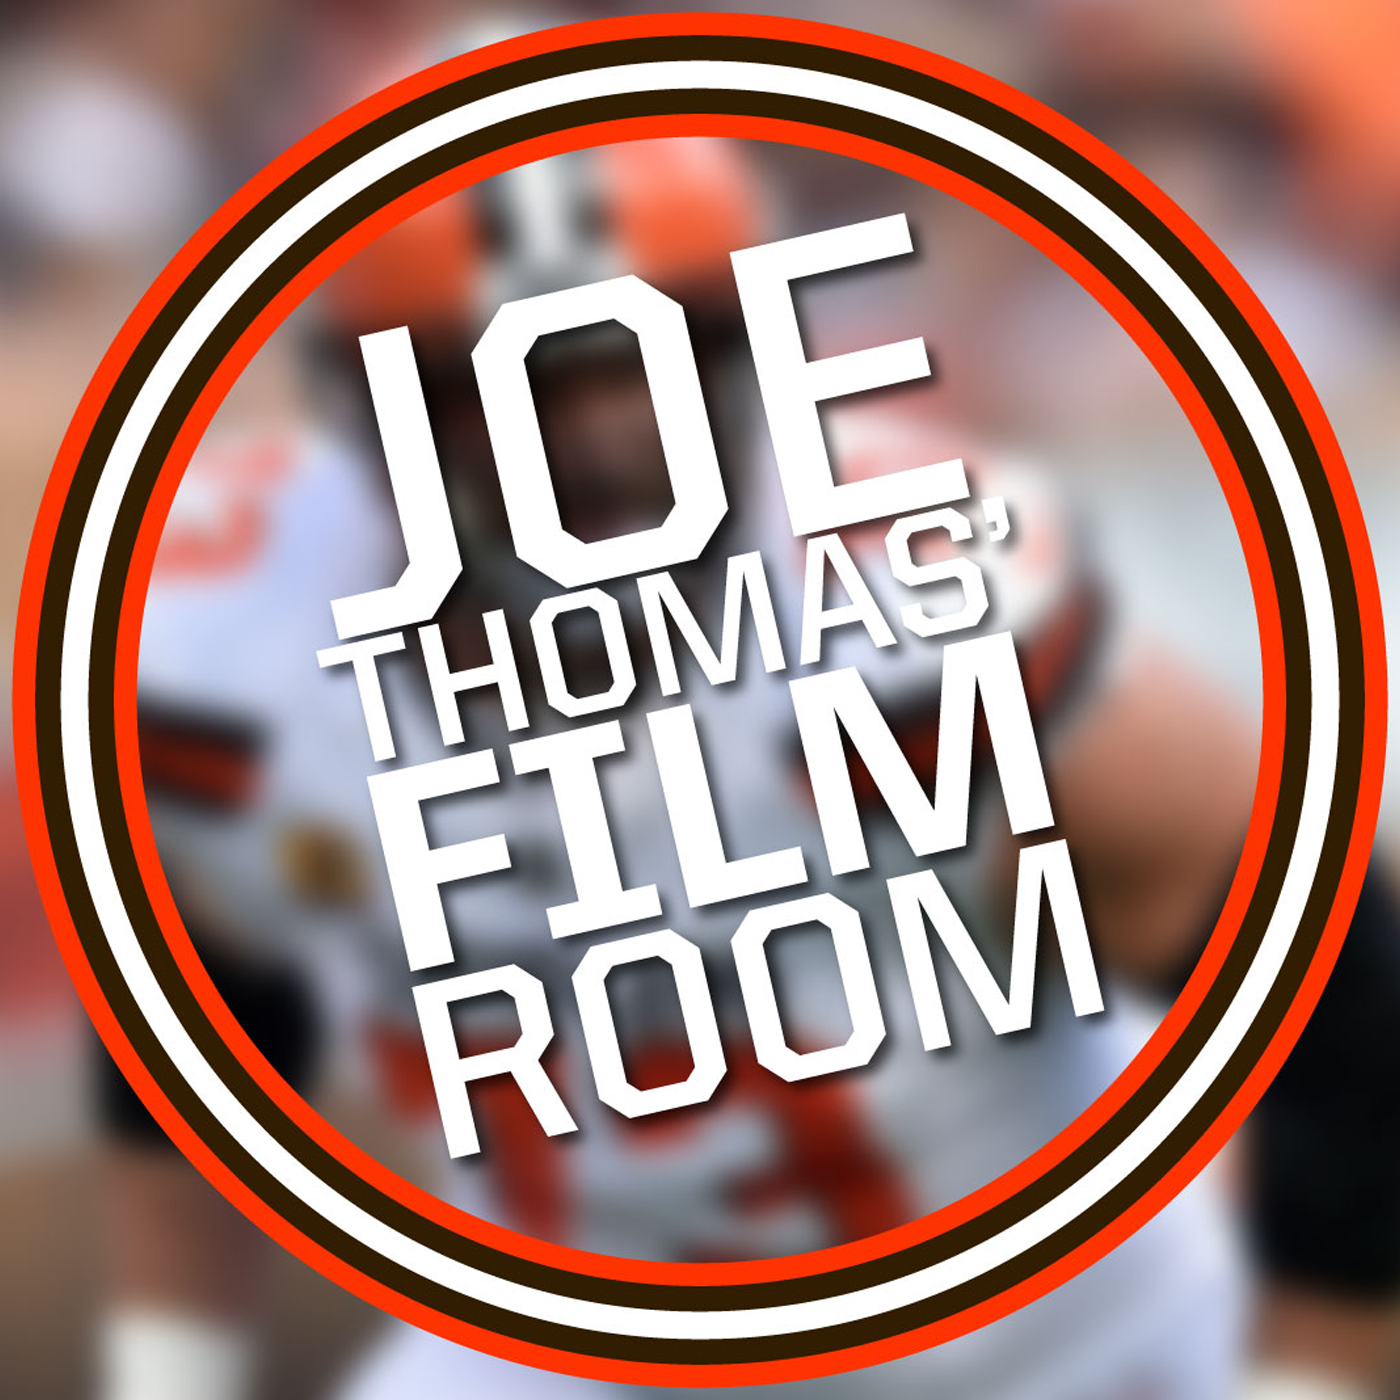 Joe Thomas’ Film Room